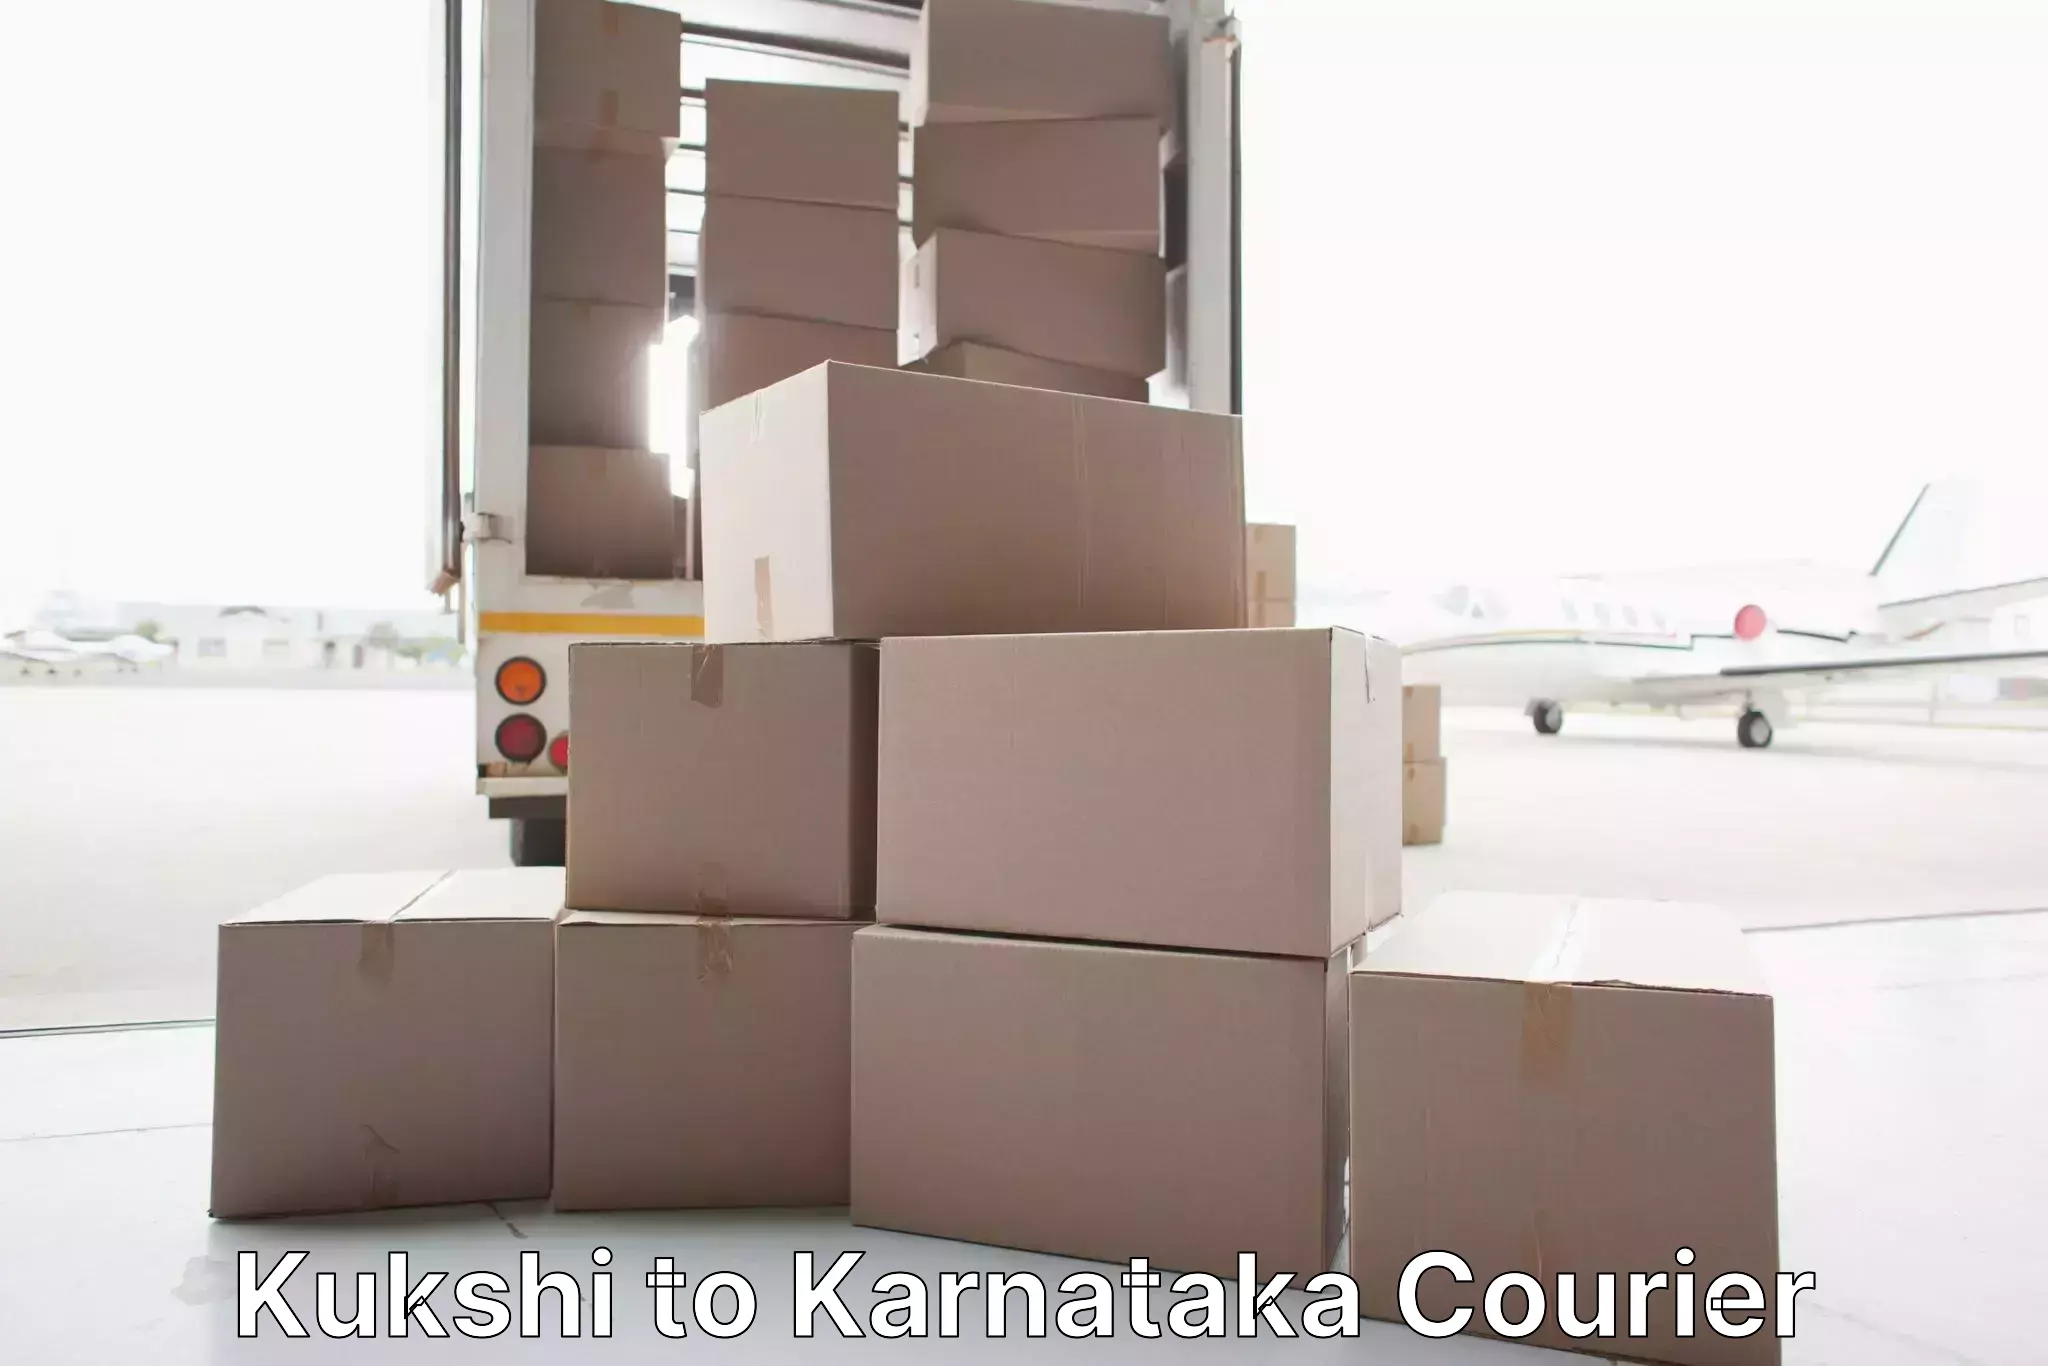 Professional moving company Kukshi to Mangalore Port